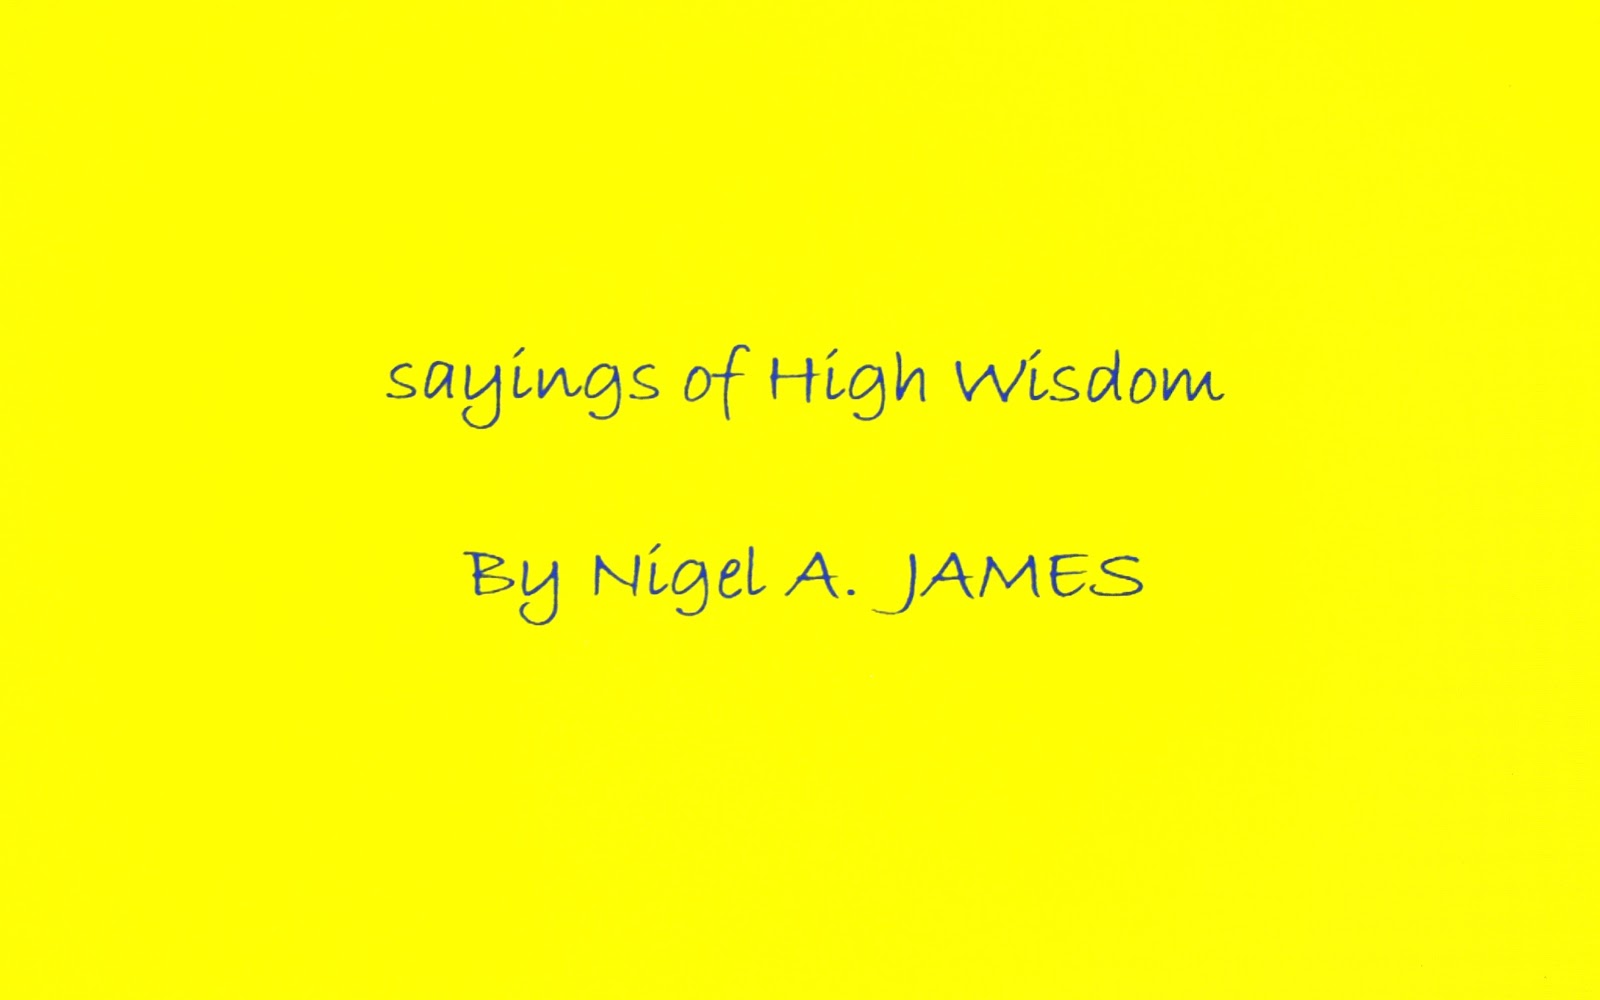 Wisdom High